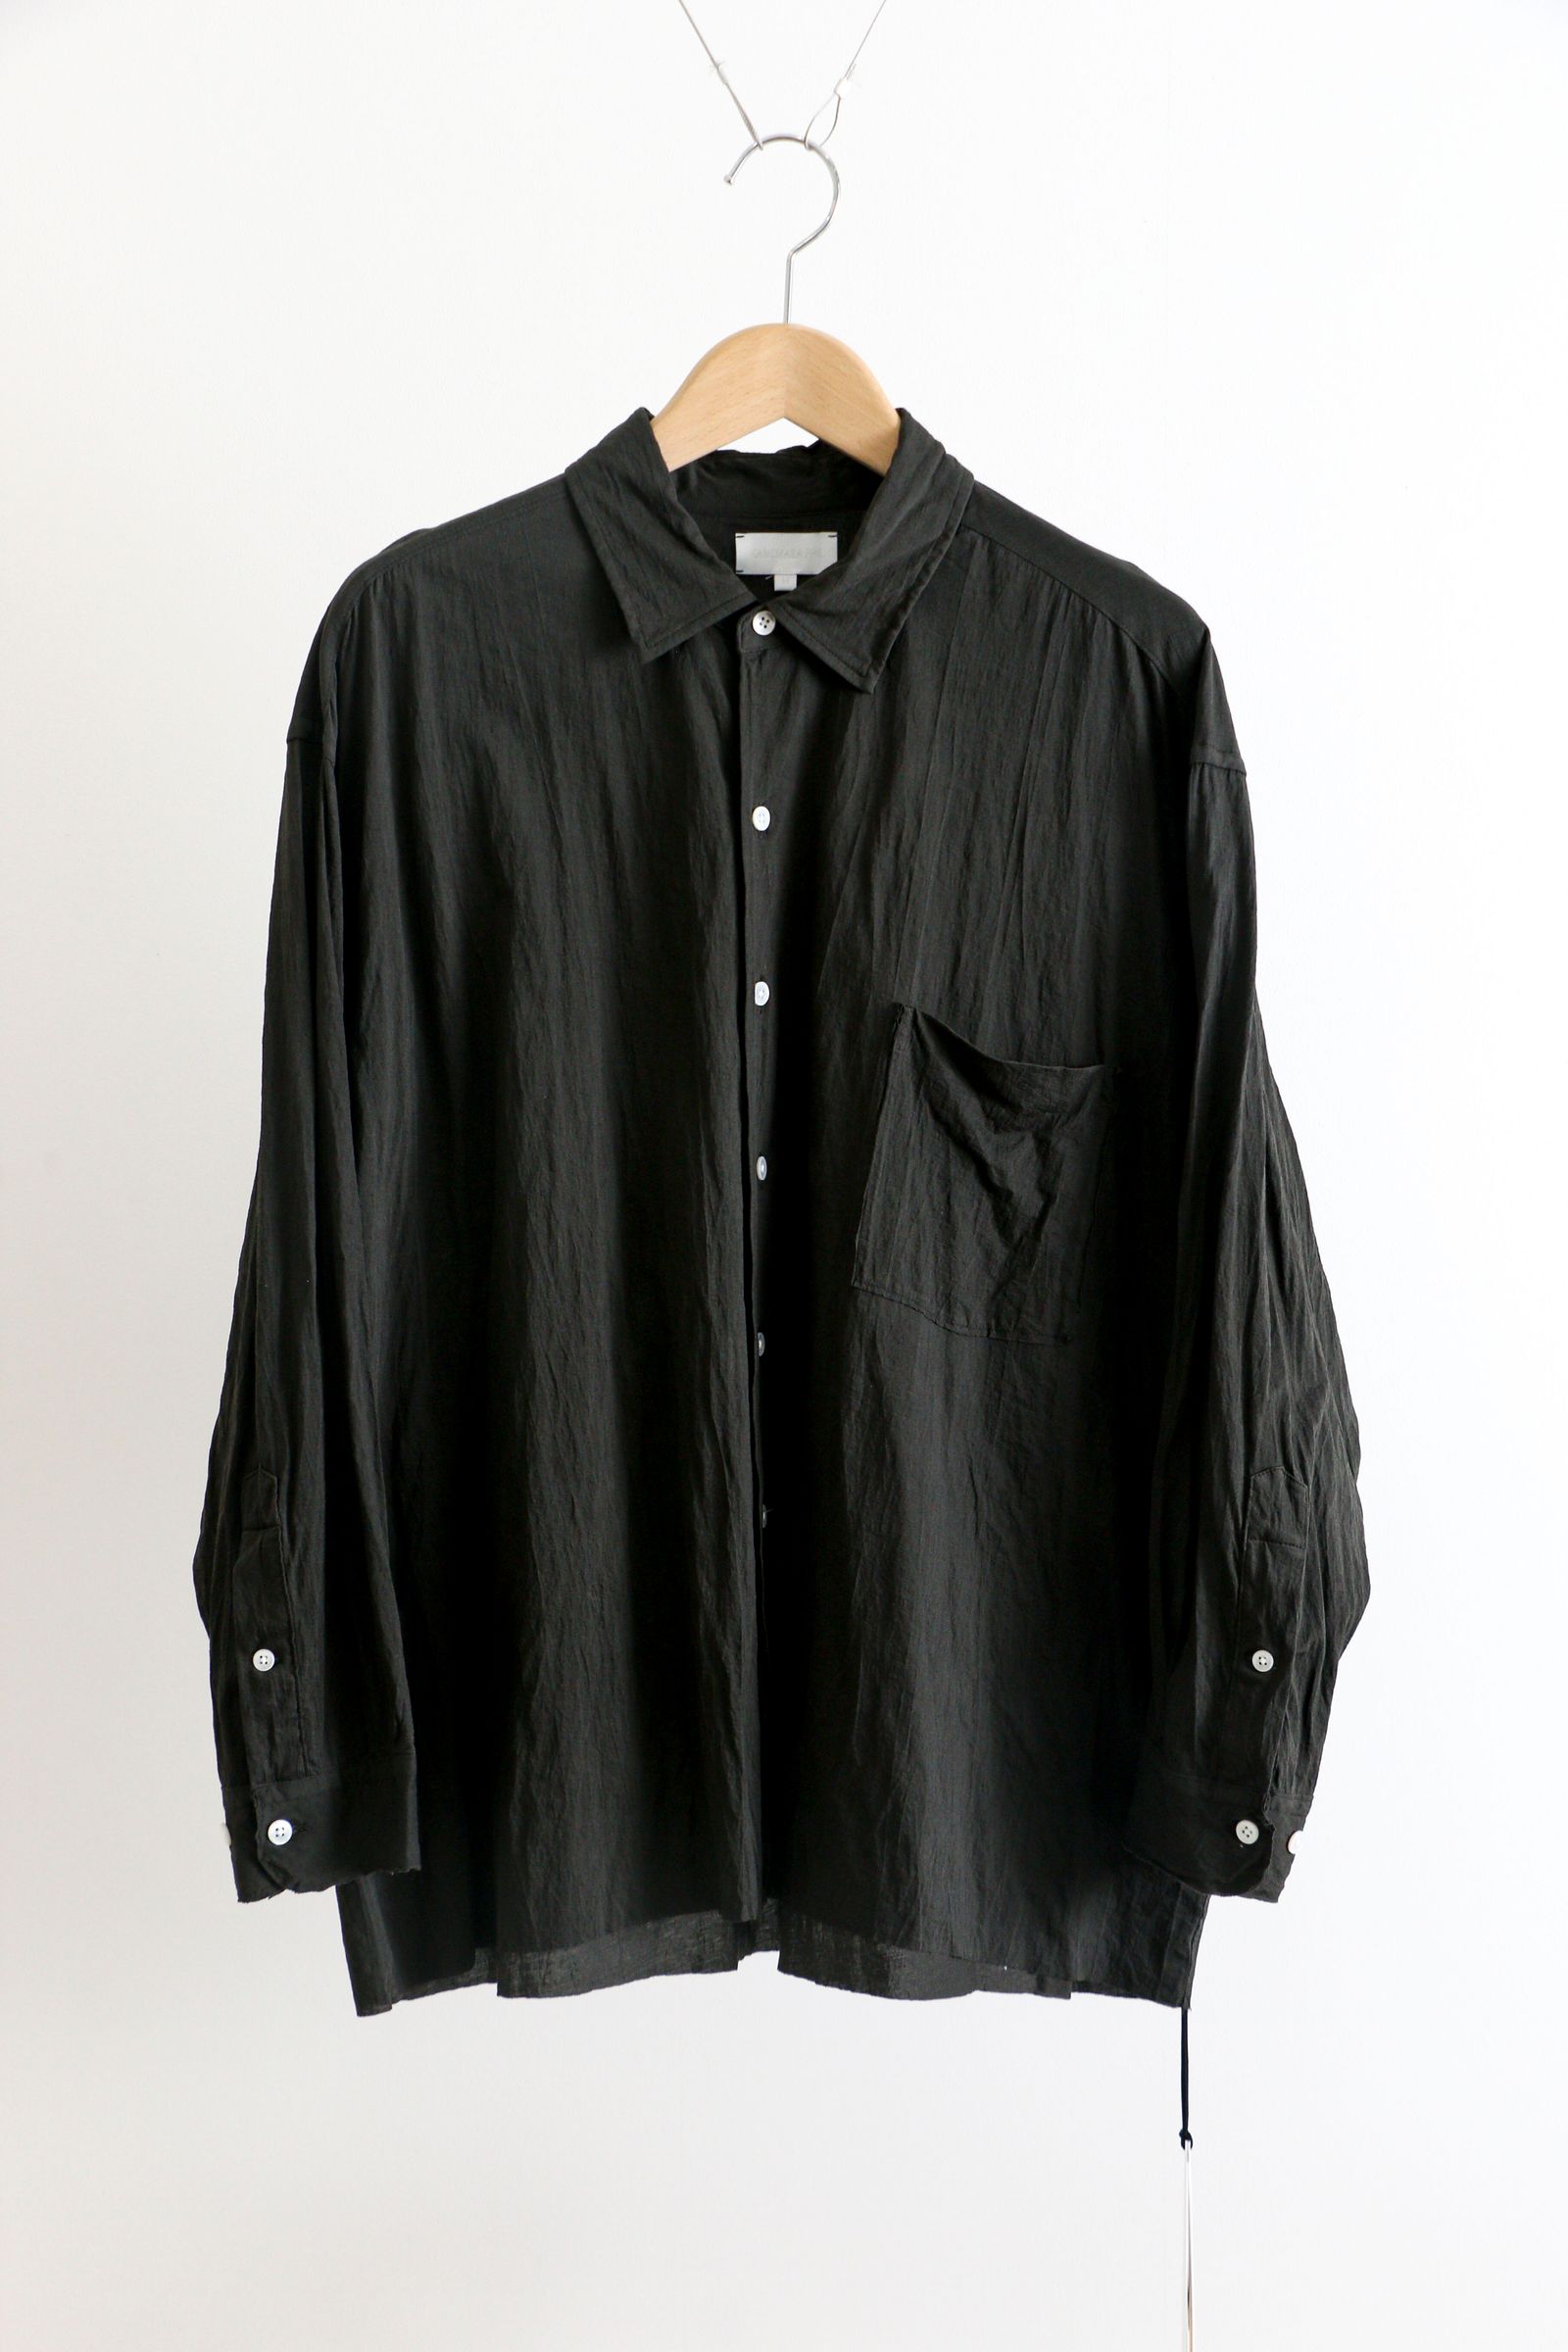 KANEMASA PHIL. - 46G Artisan Jersey Shirt SUMI / シャツ | koko